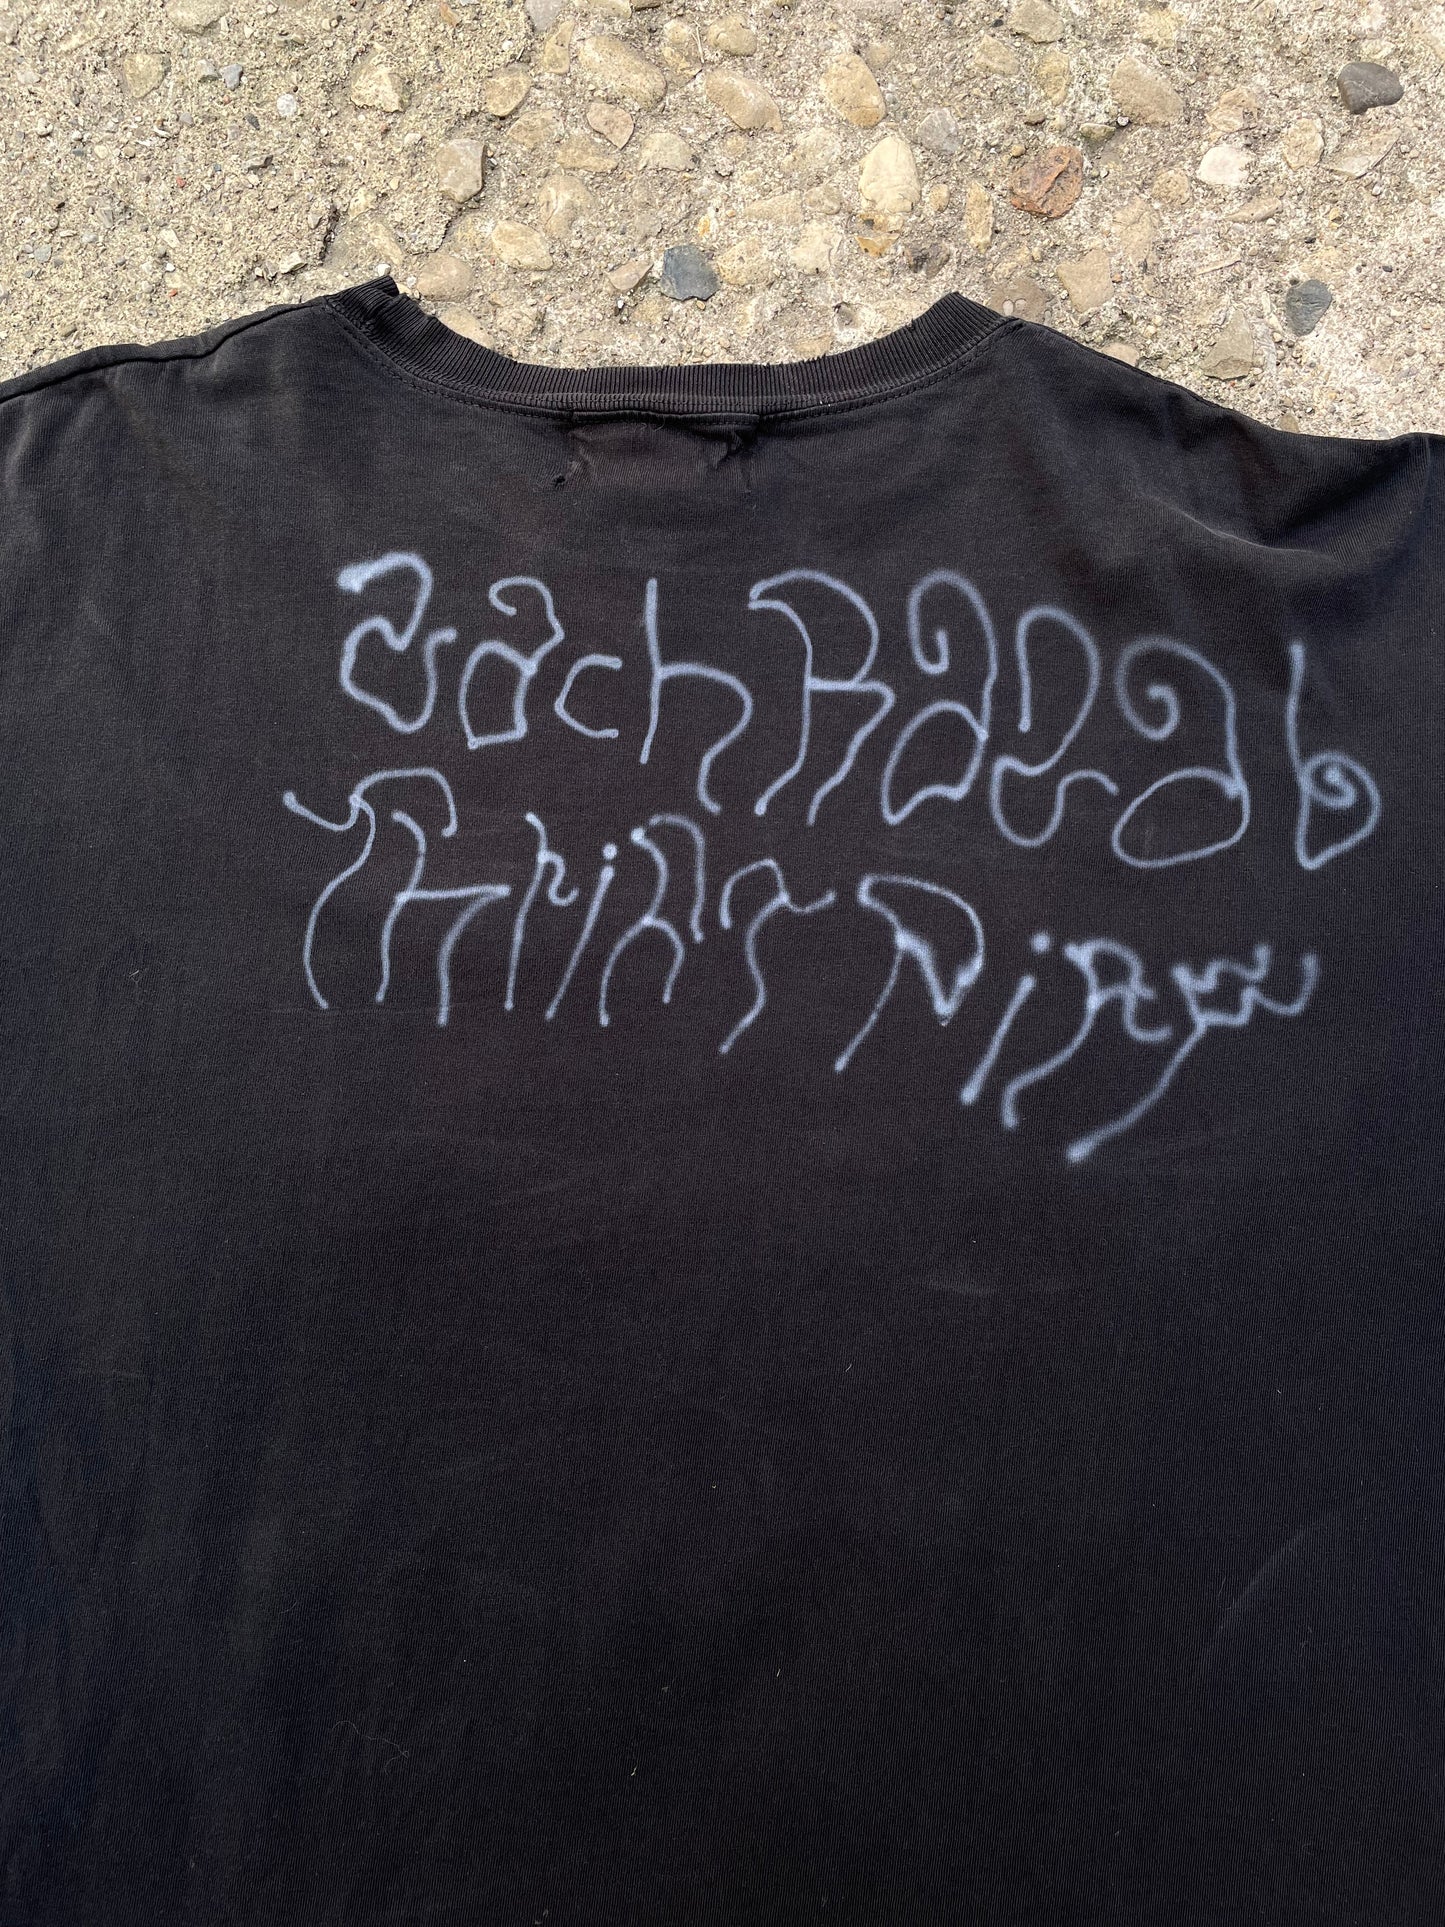 Zach Gucci Razal x Thrift Piff Airbrush 'Chair' T-Shirt - XXL